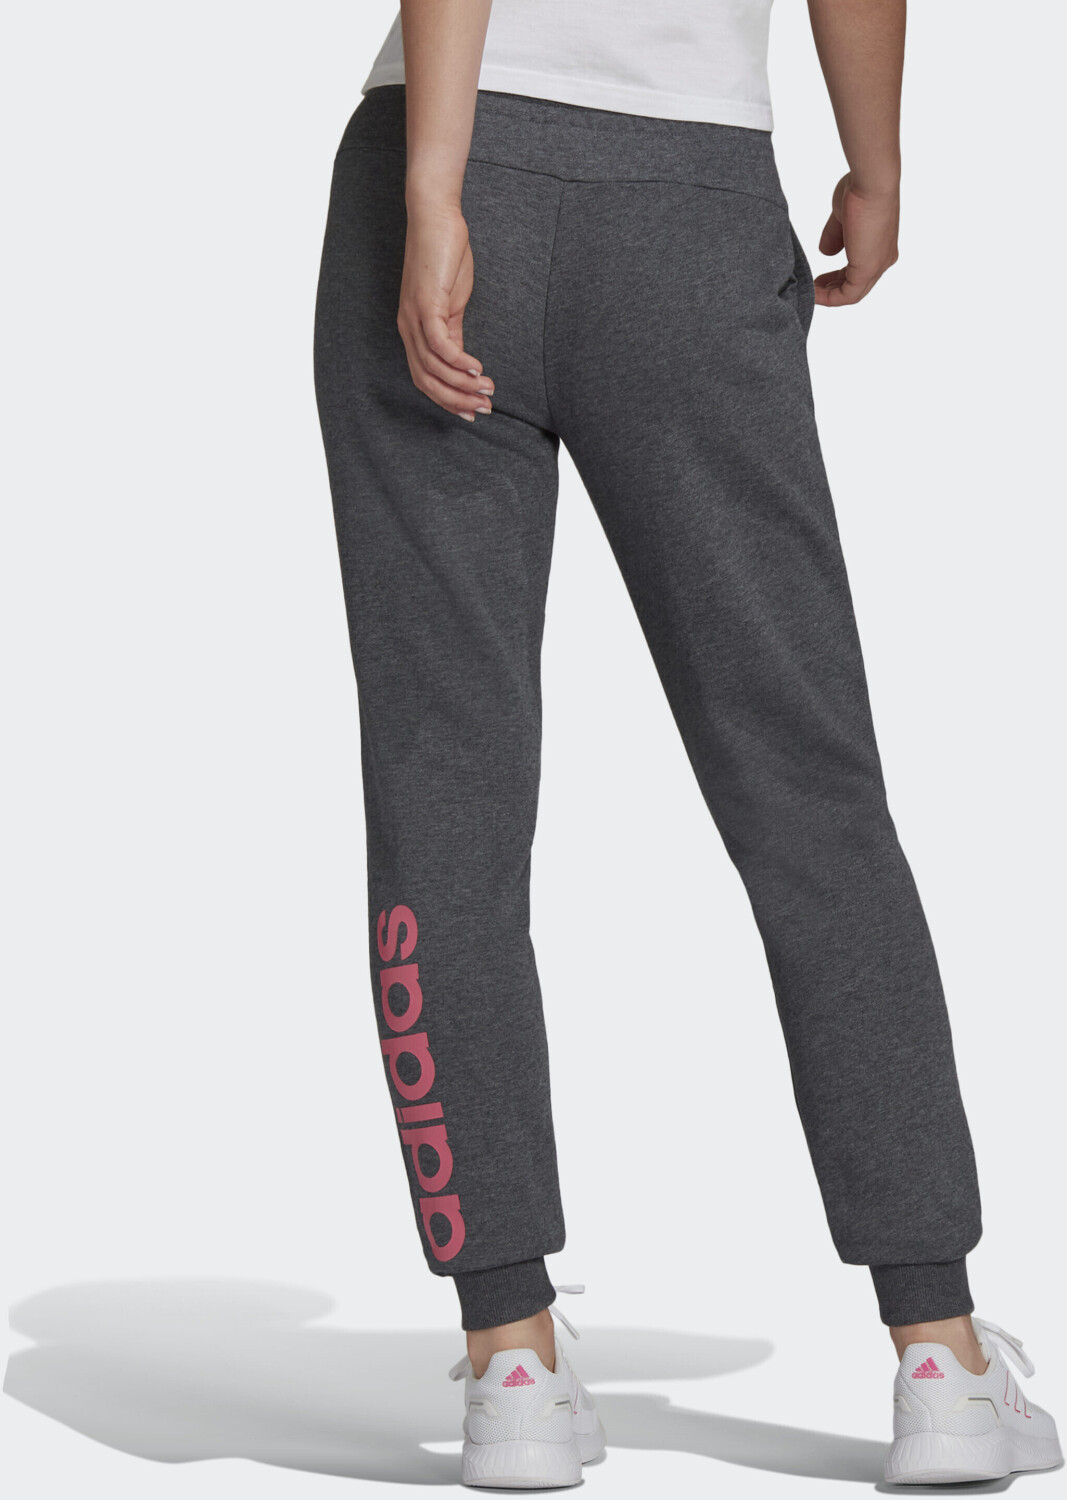 Adidas Essentials French Terry Logo Pants Women ab € 20,95 | Preisvergleich  bei